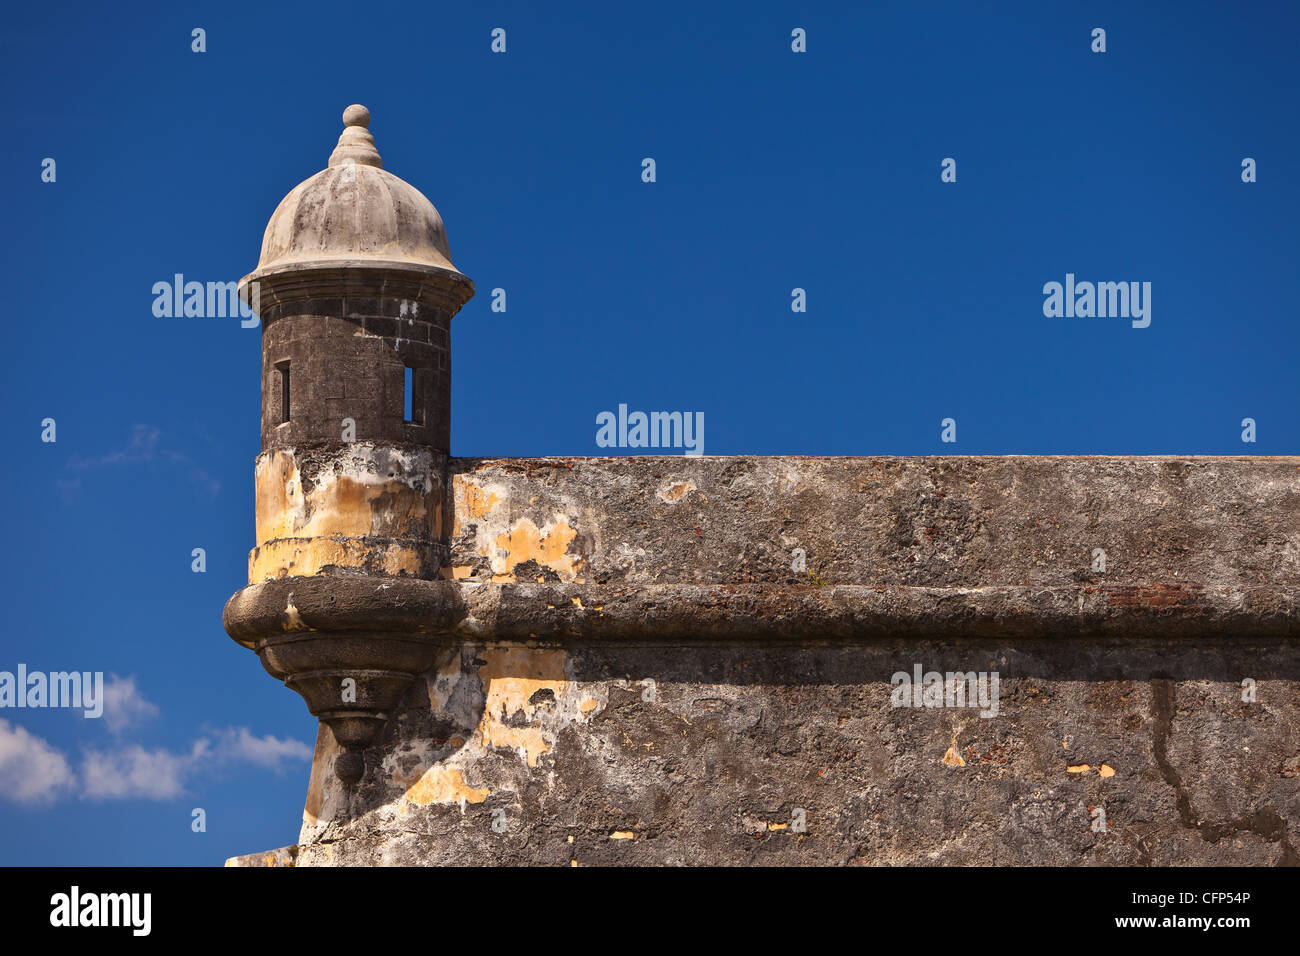 OLD SAN JUAN, PUERTO RICO - Sentry box turret on wall of Castillo San Felipe del Morro, historic fortress. Stock Photo